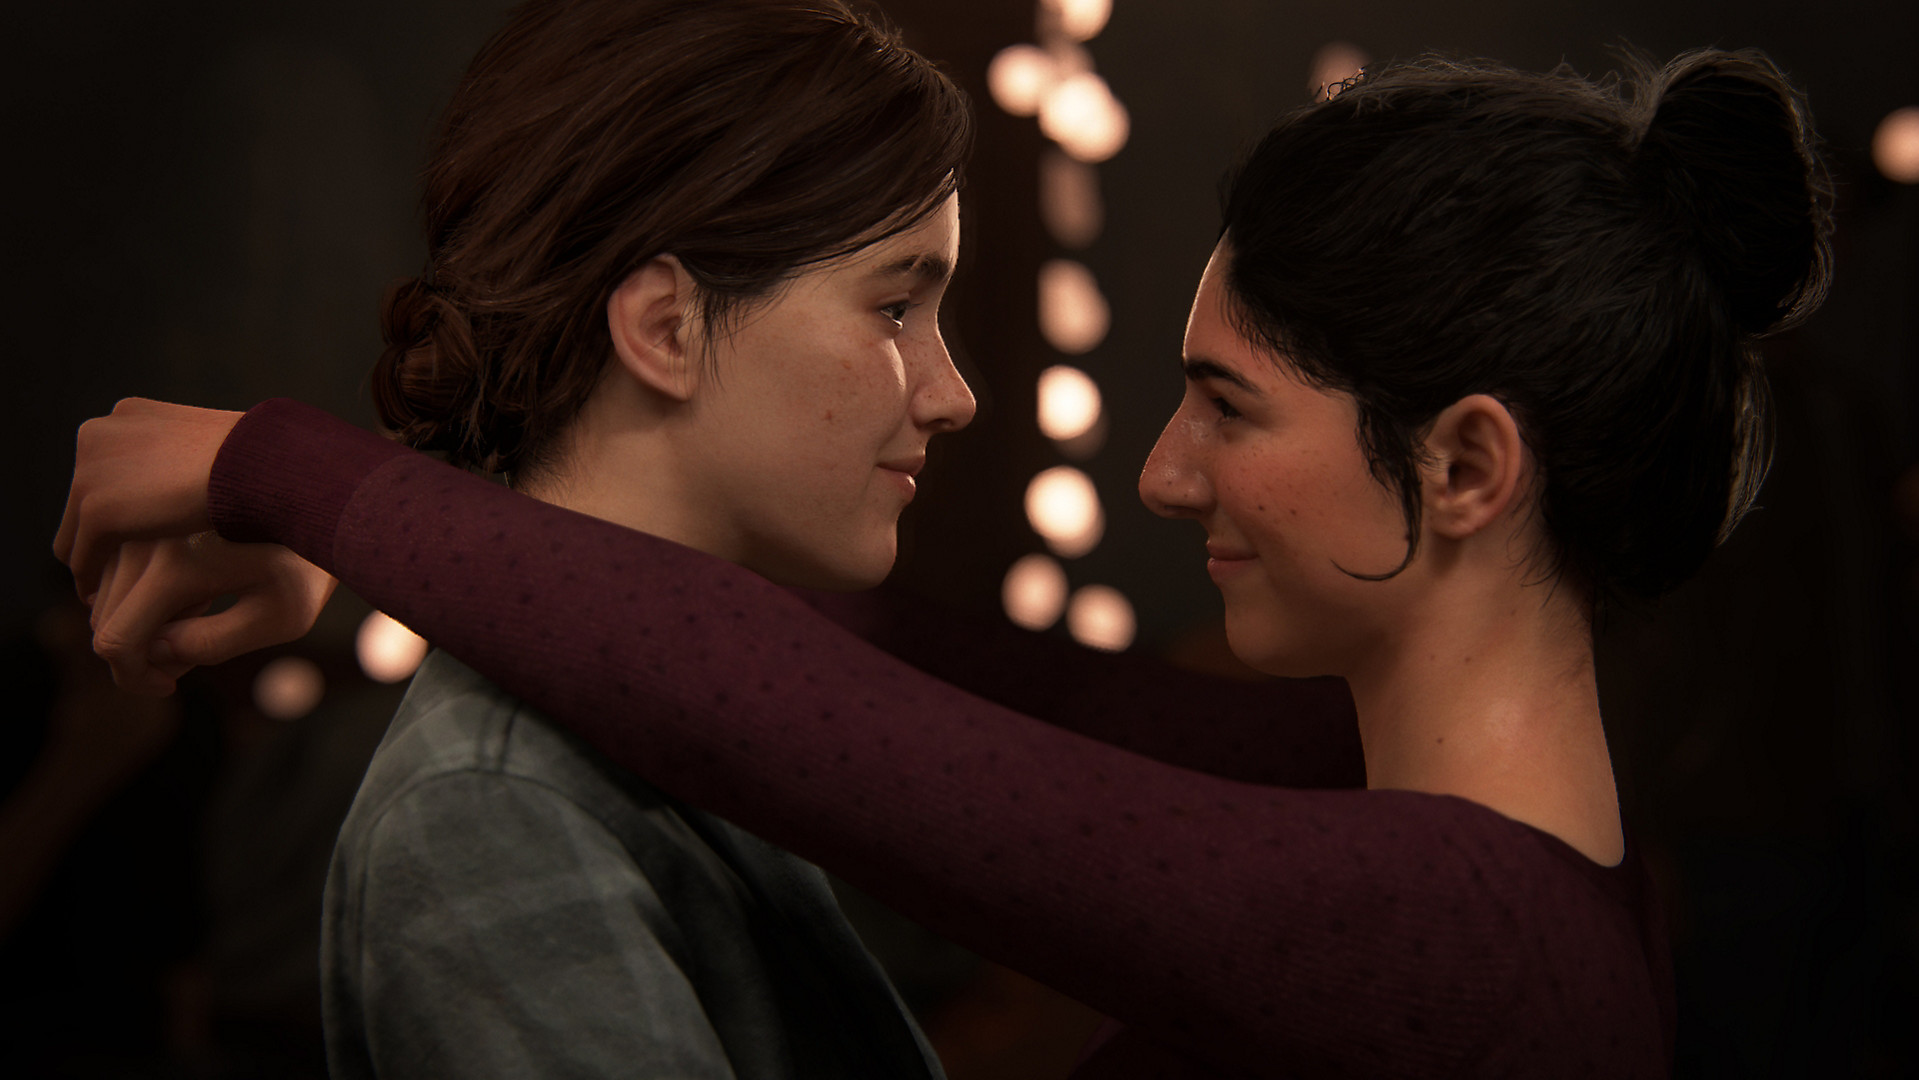 Ellie og Dina i en kjærlig omfavnelse. | Foto: Naughty Dog / Sony Interactive Entertainment